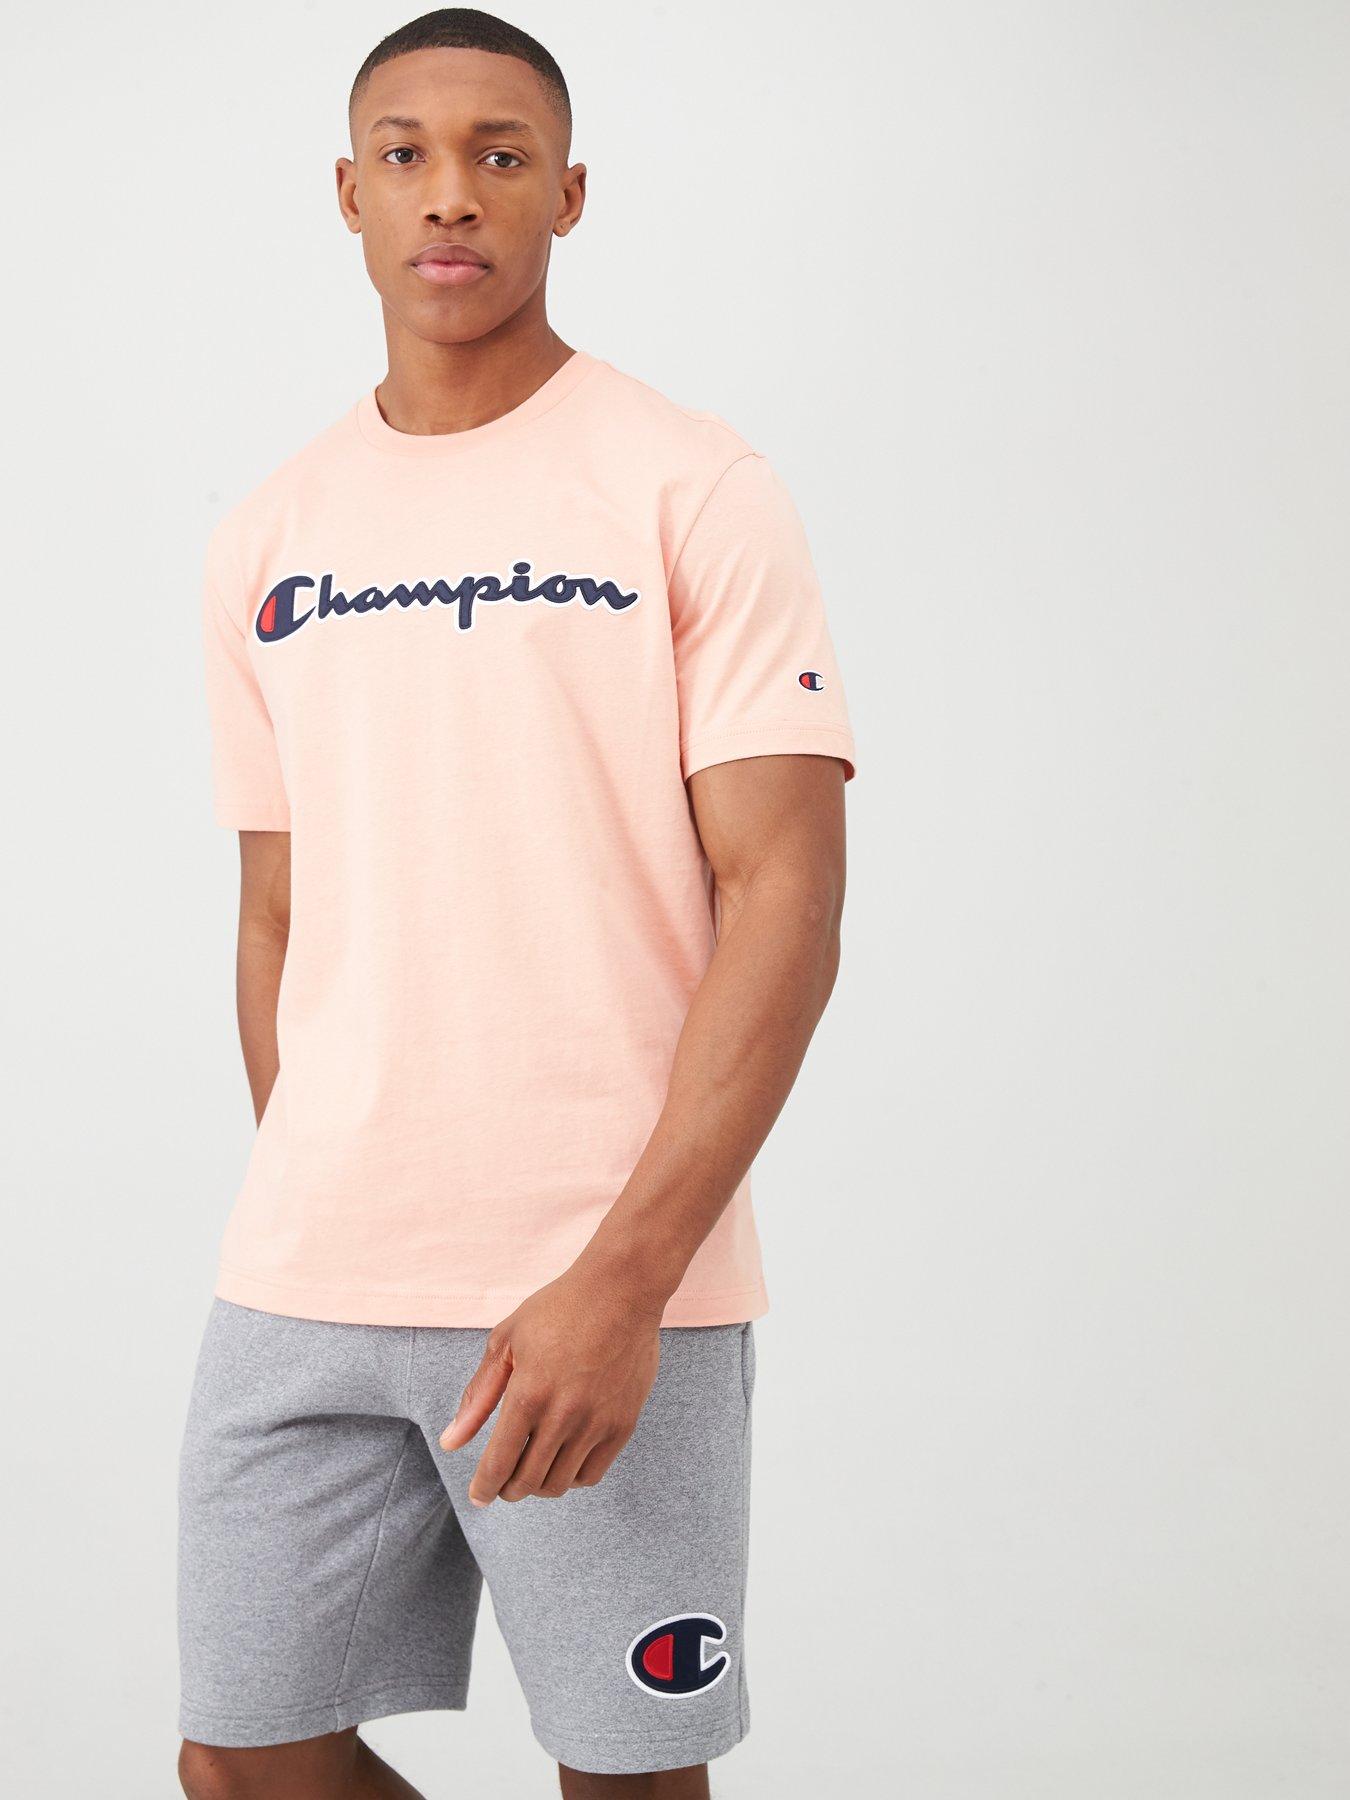 pastel champion t shirt